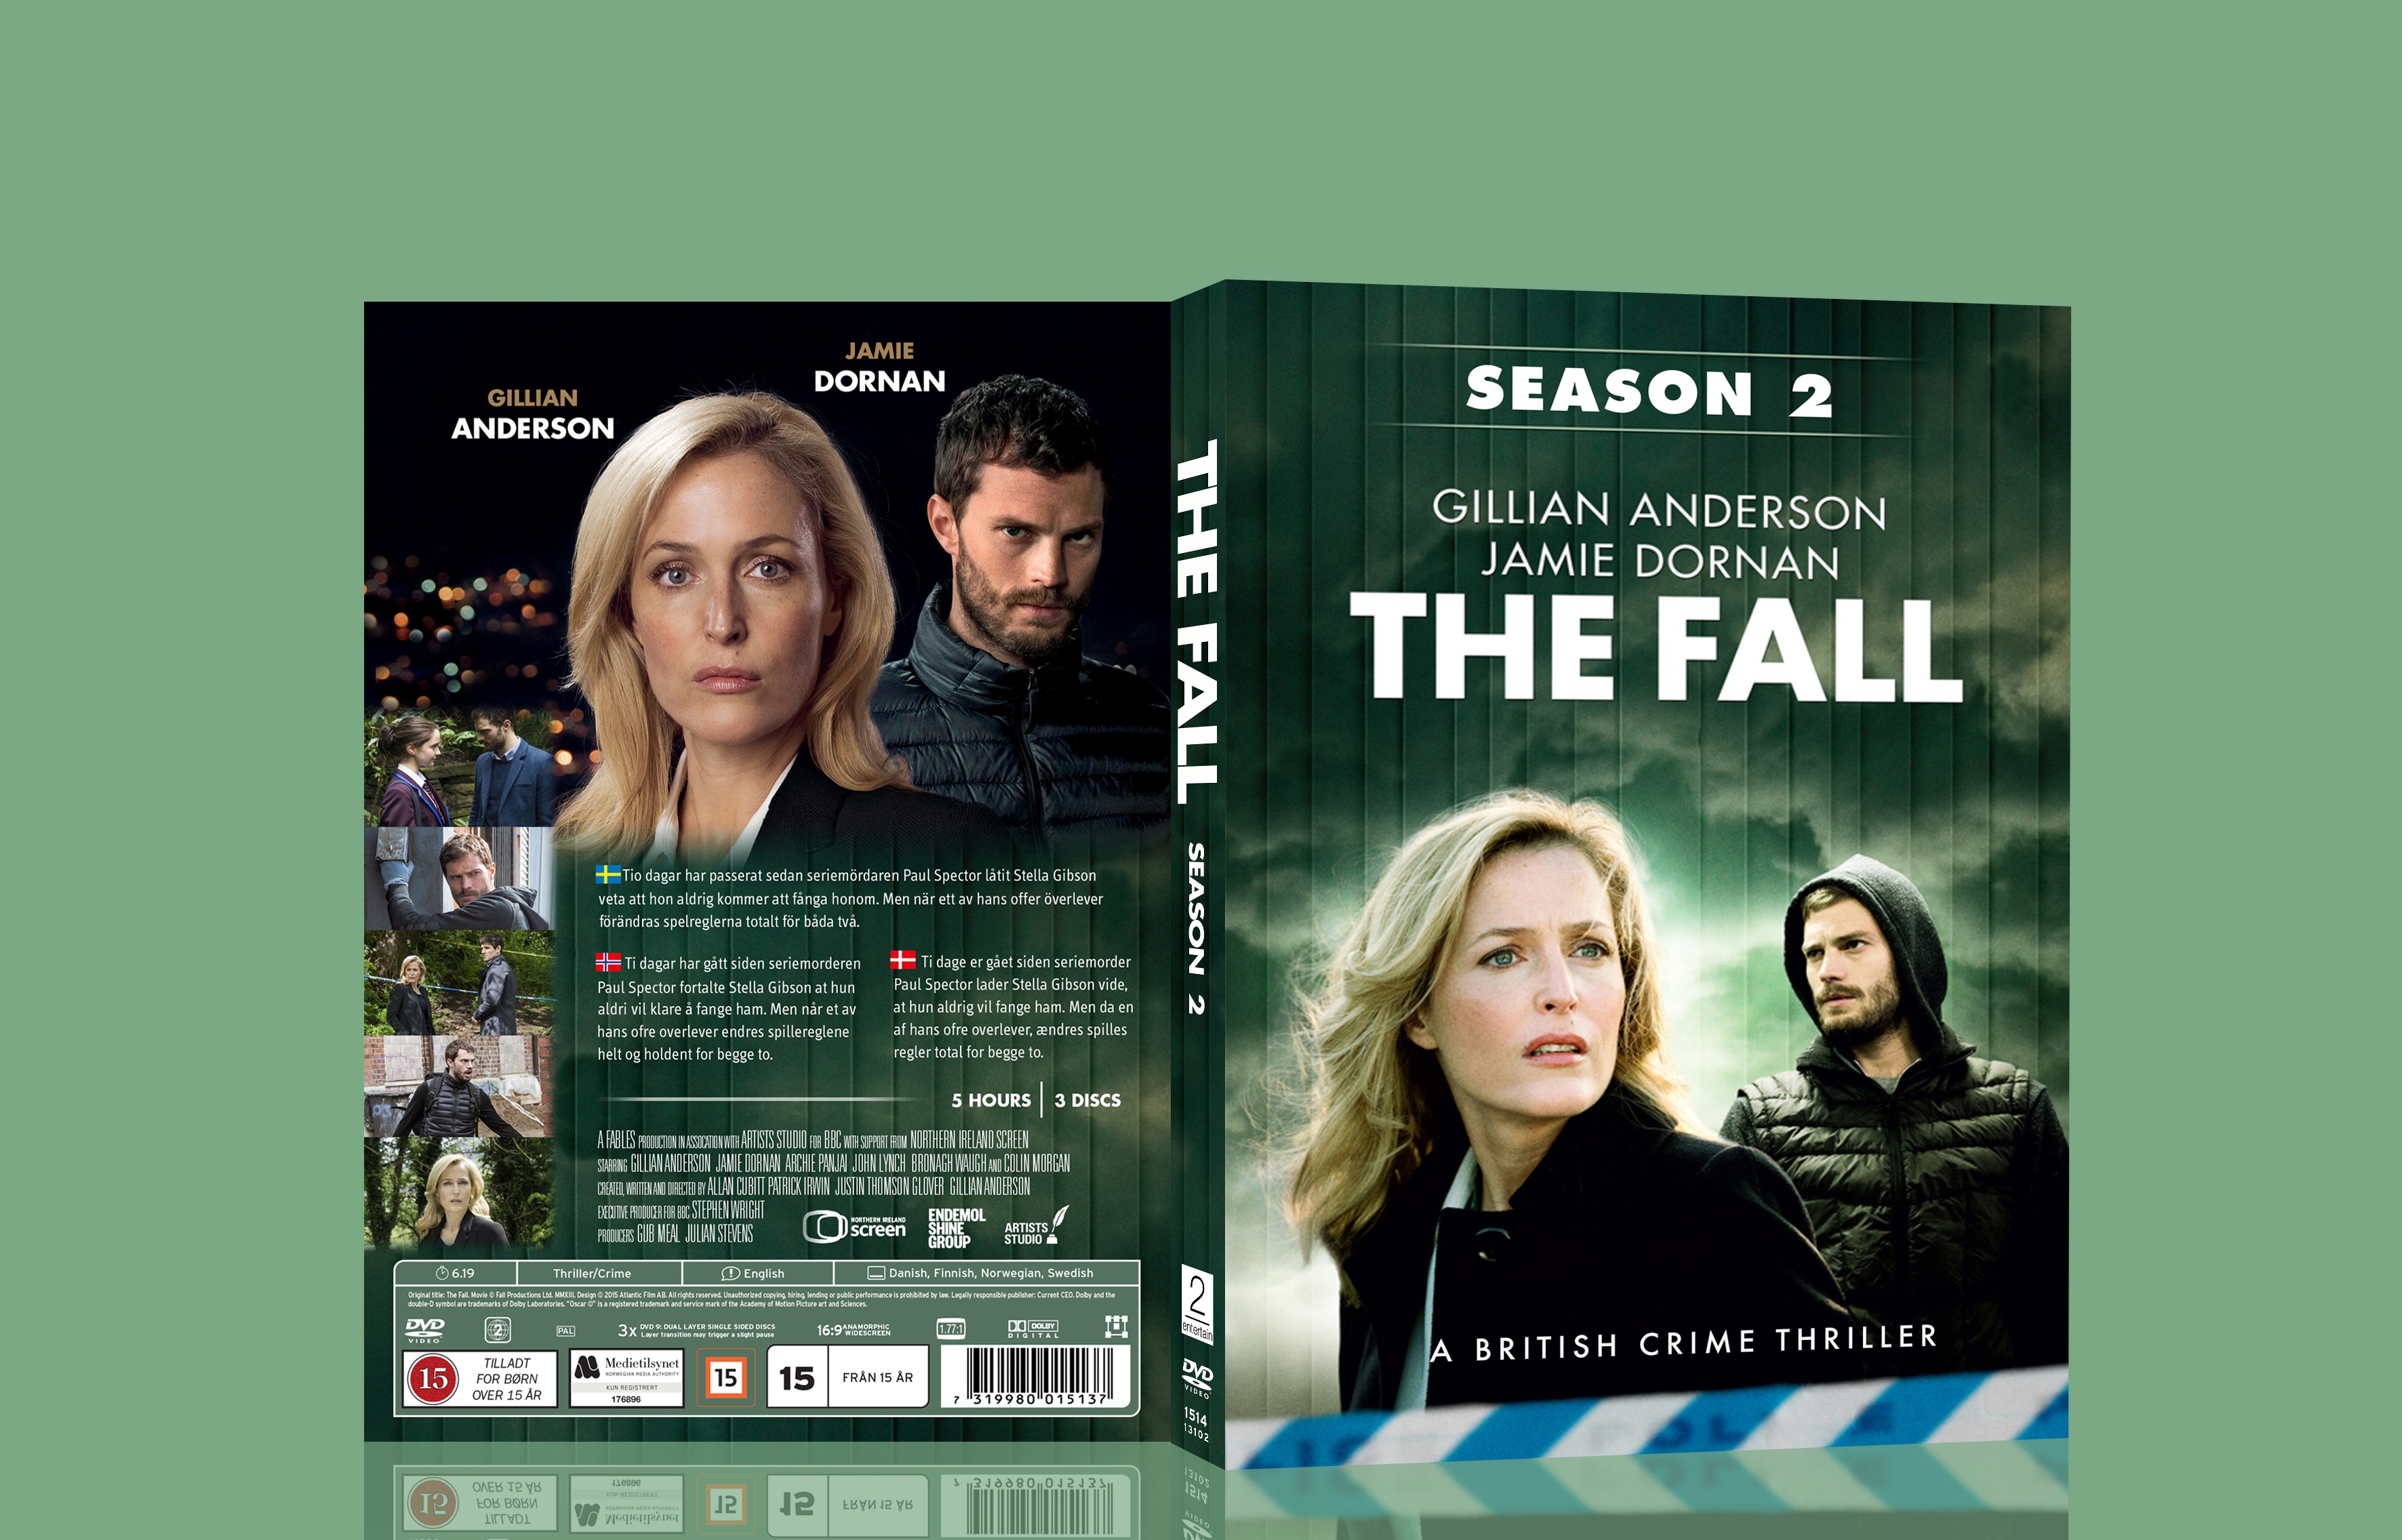 The fall : Season 2 box cover